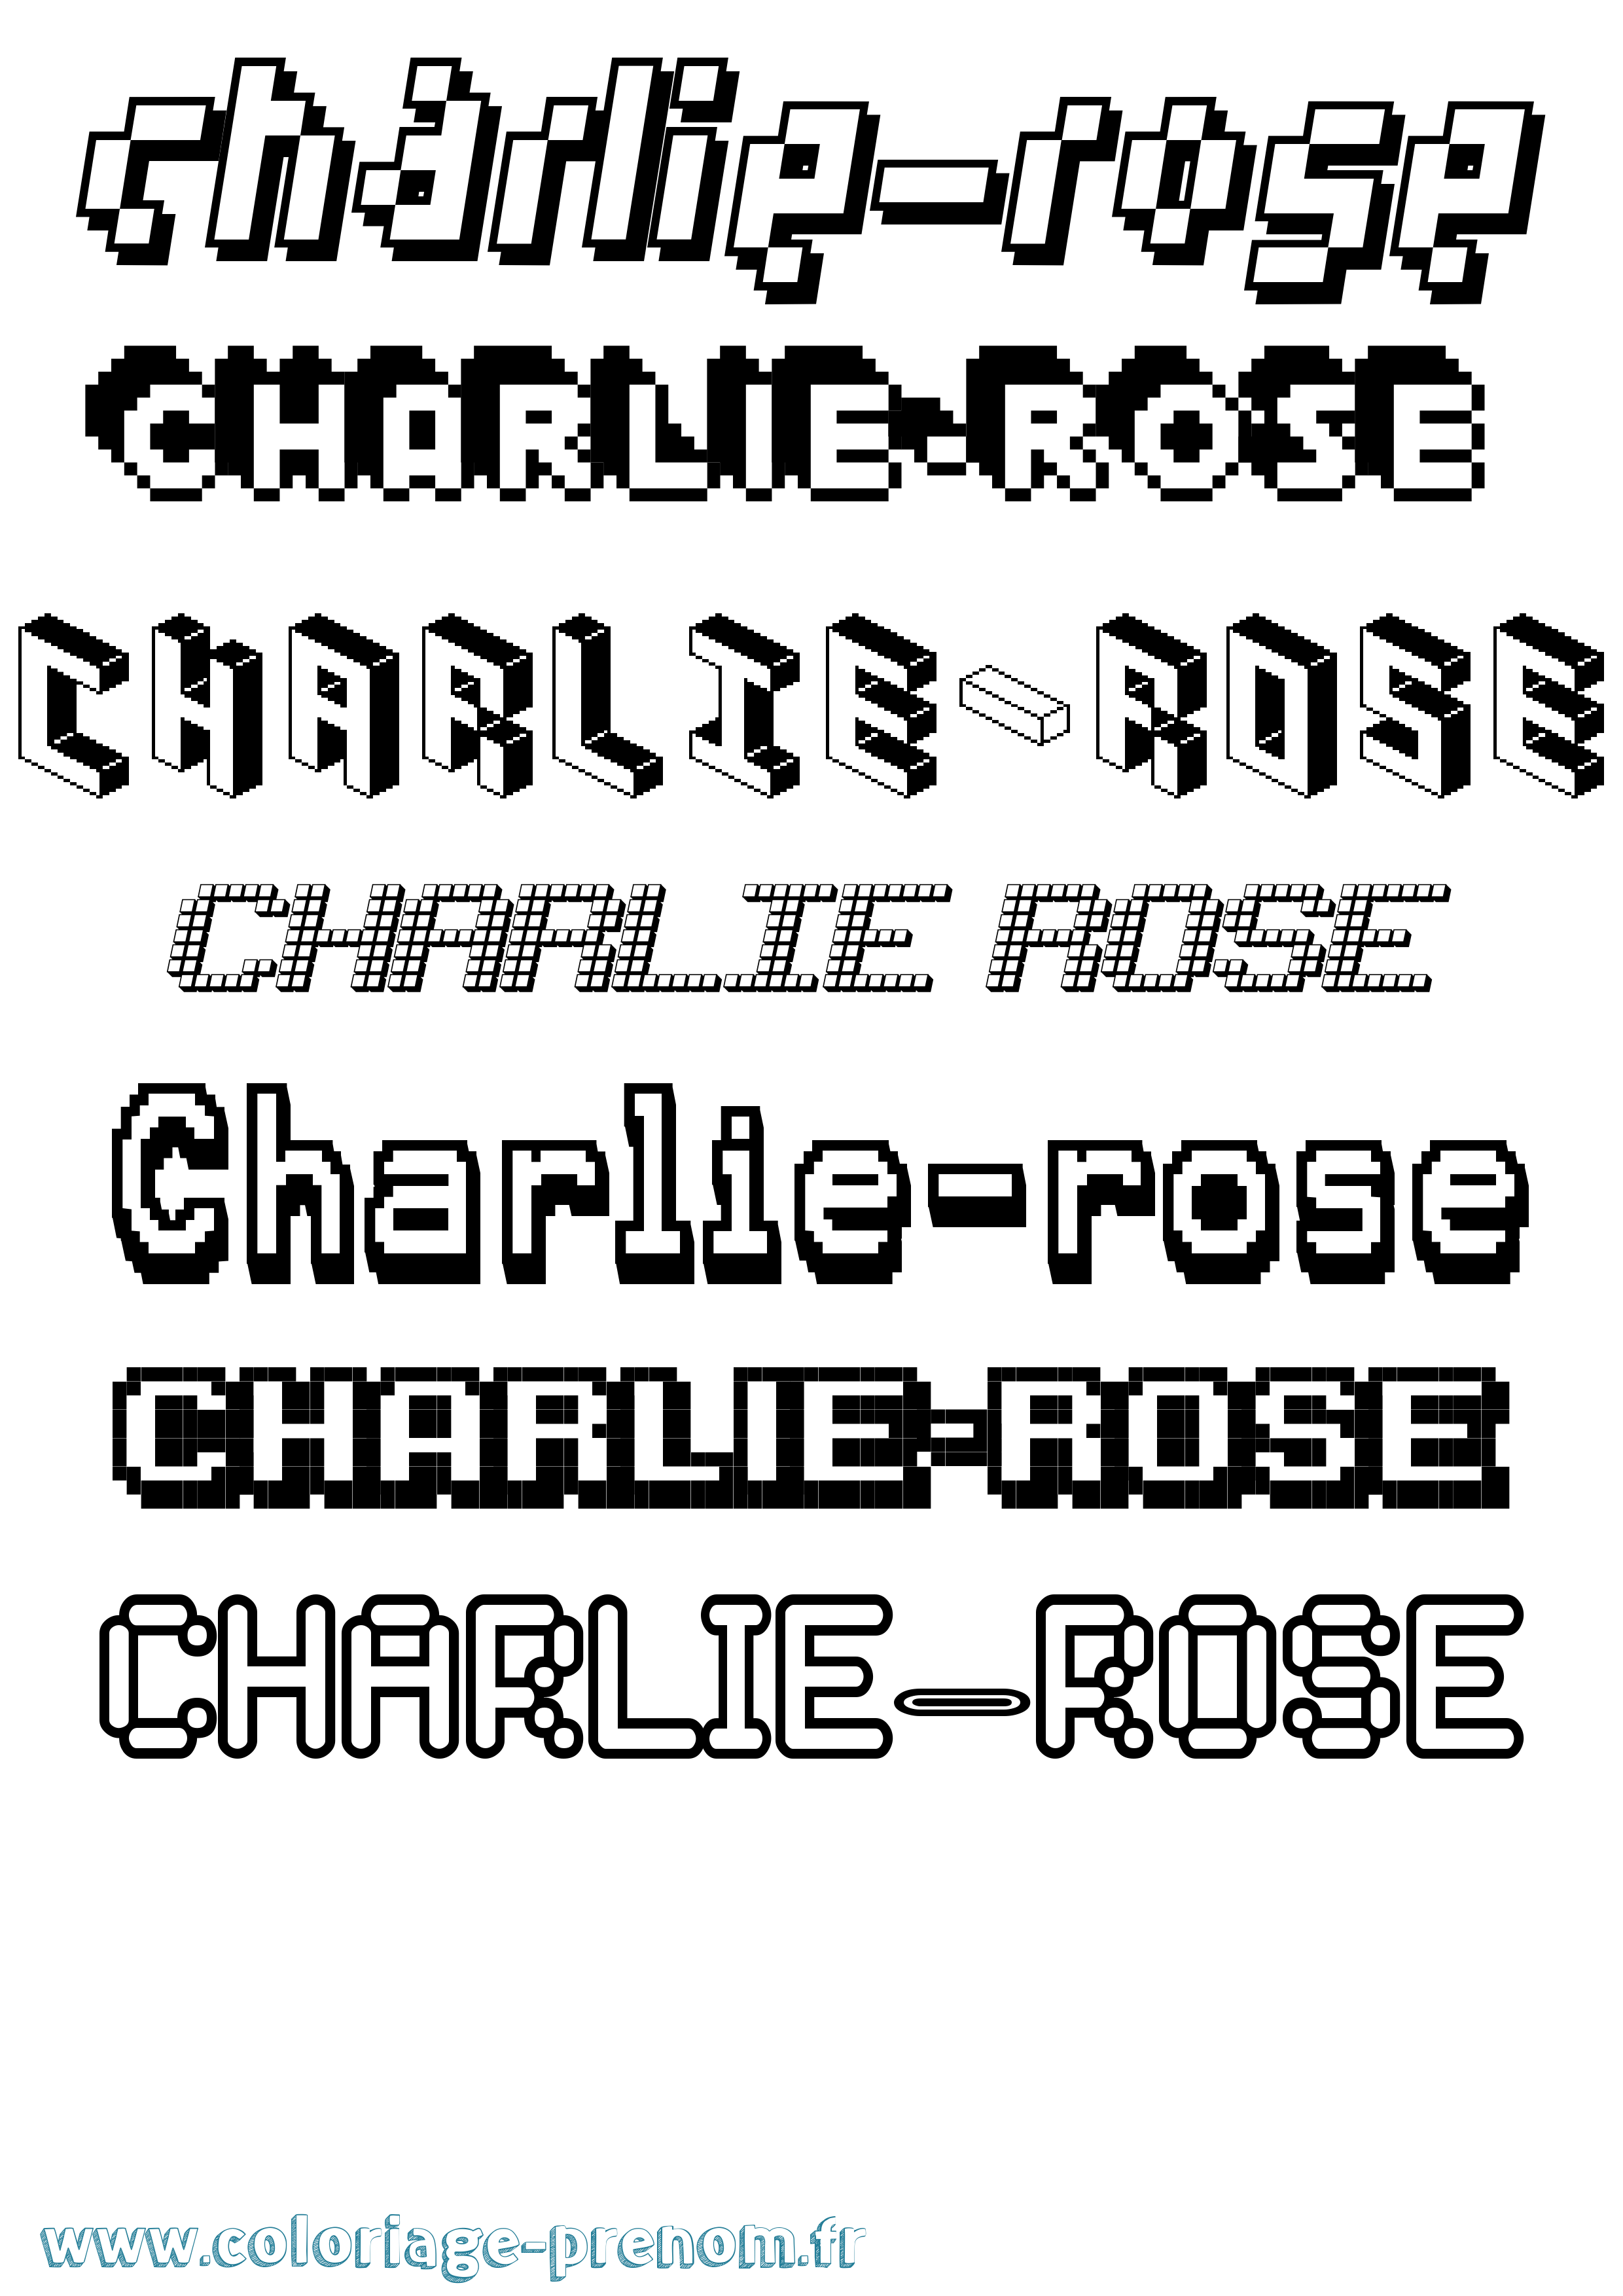 Coloriage prénom Charlie-Rose Pixel